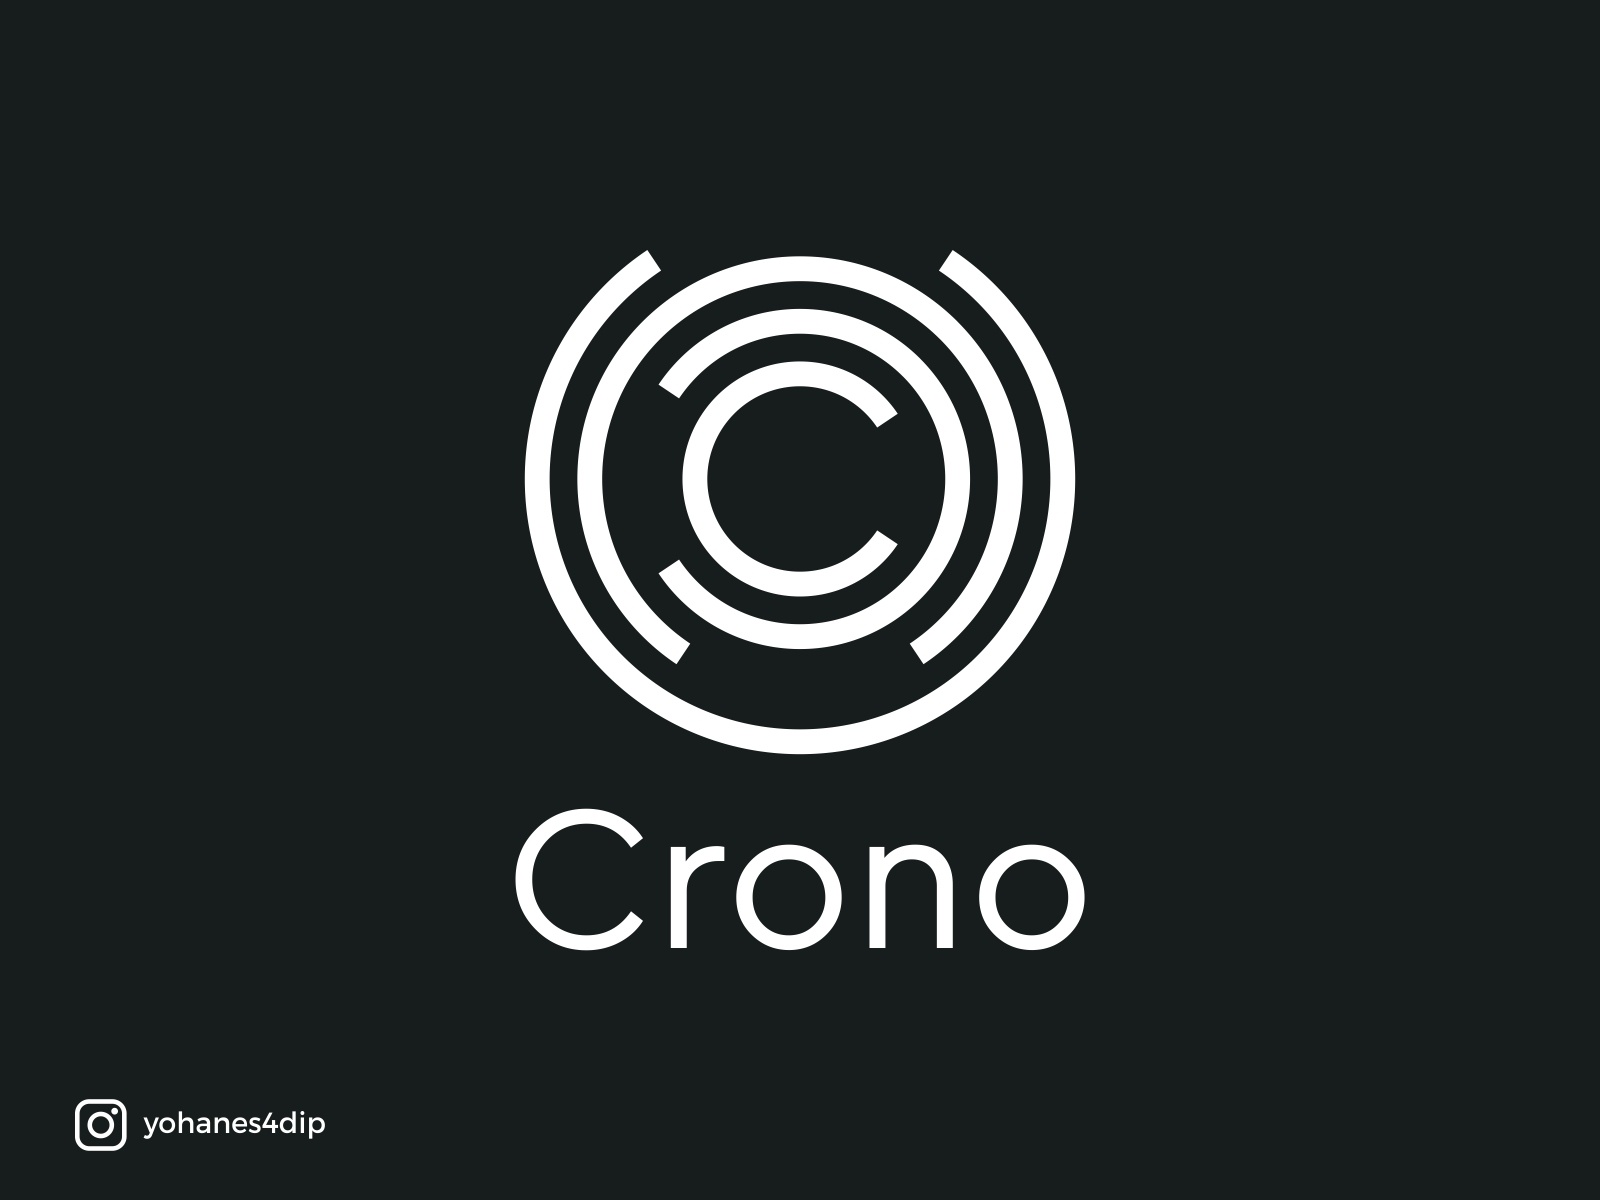 Crono logo